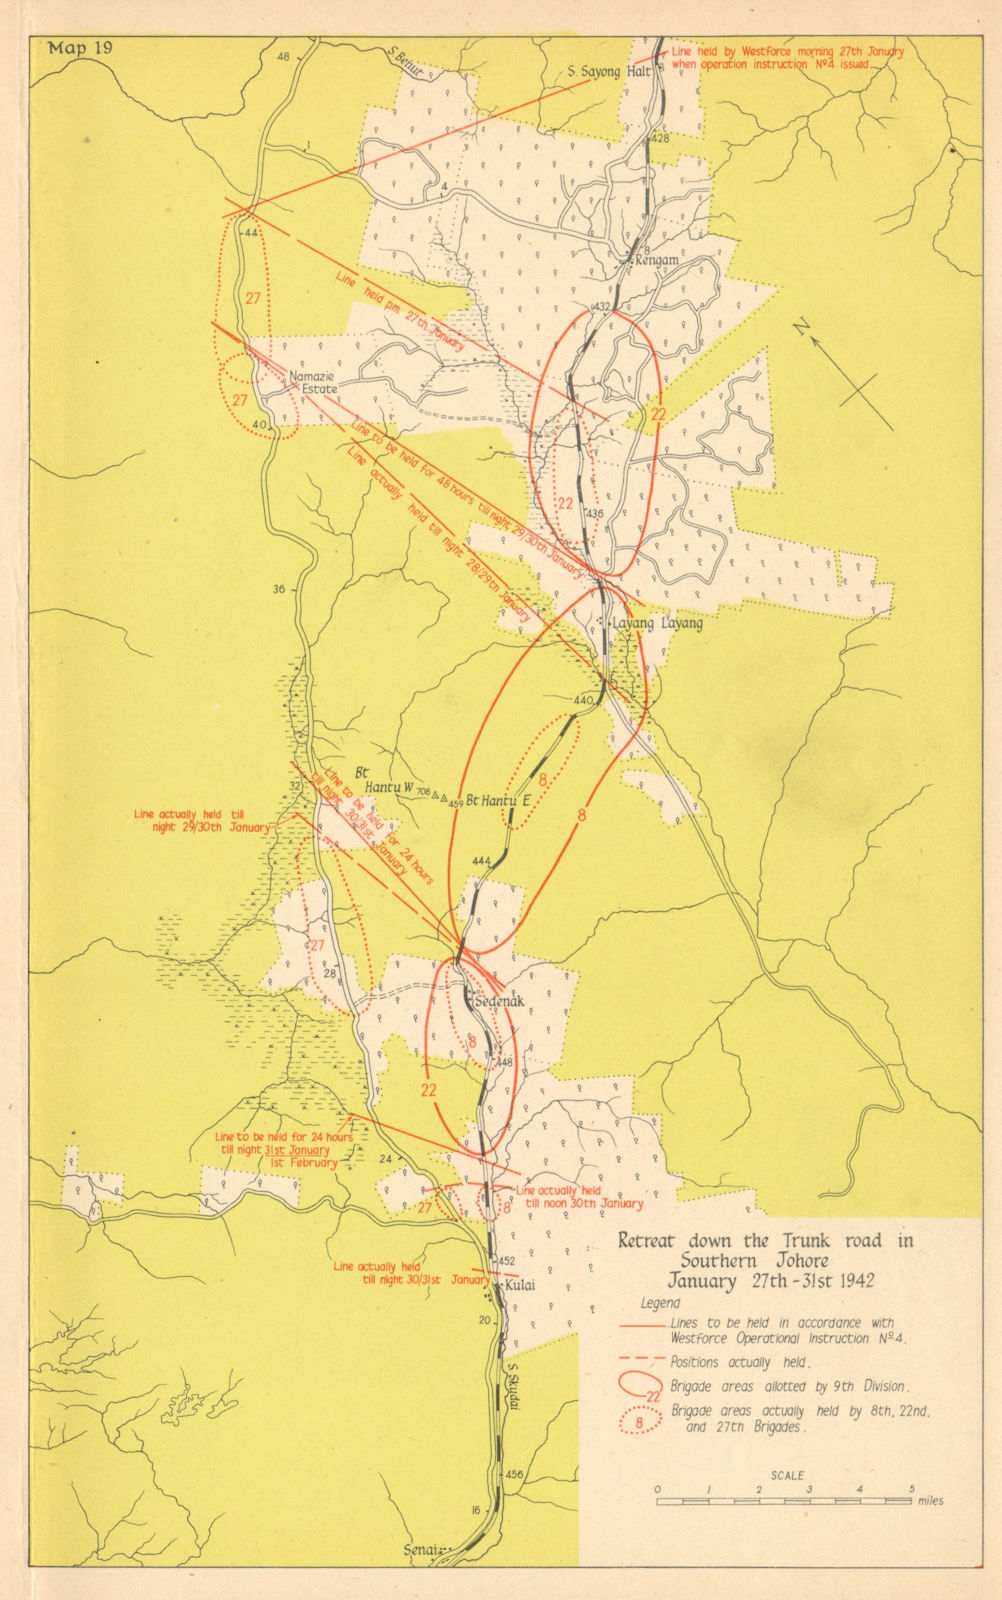 Associate Product Japanese invasion of Malaya. Retreat in southern Johore, 27-31 Jan 1942 1957 map